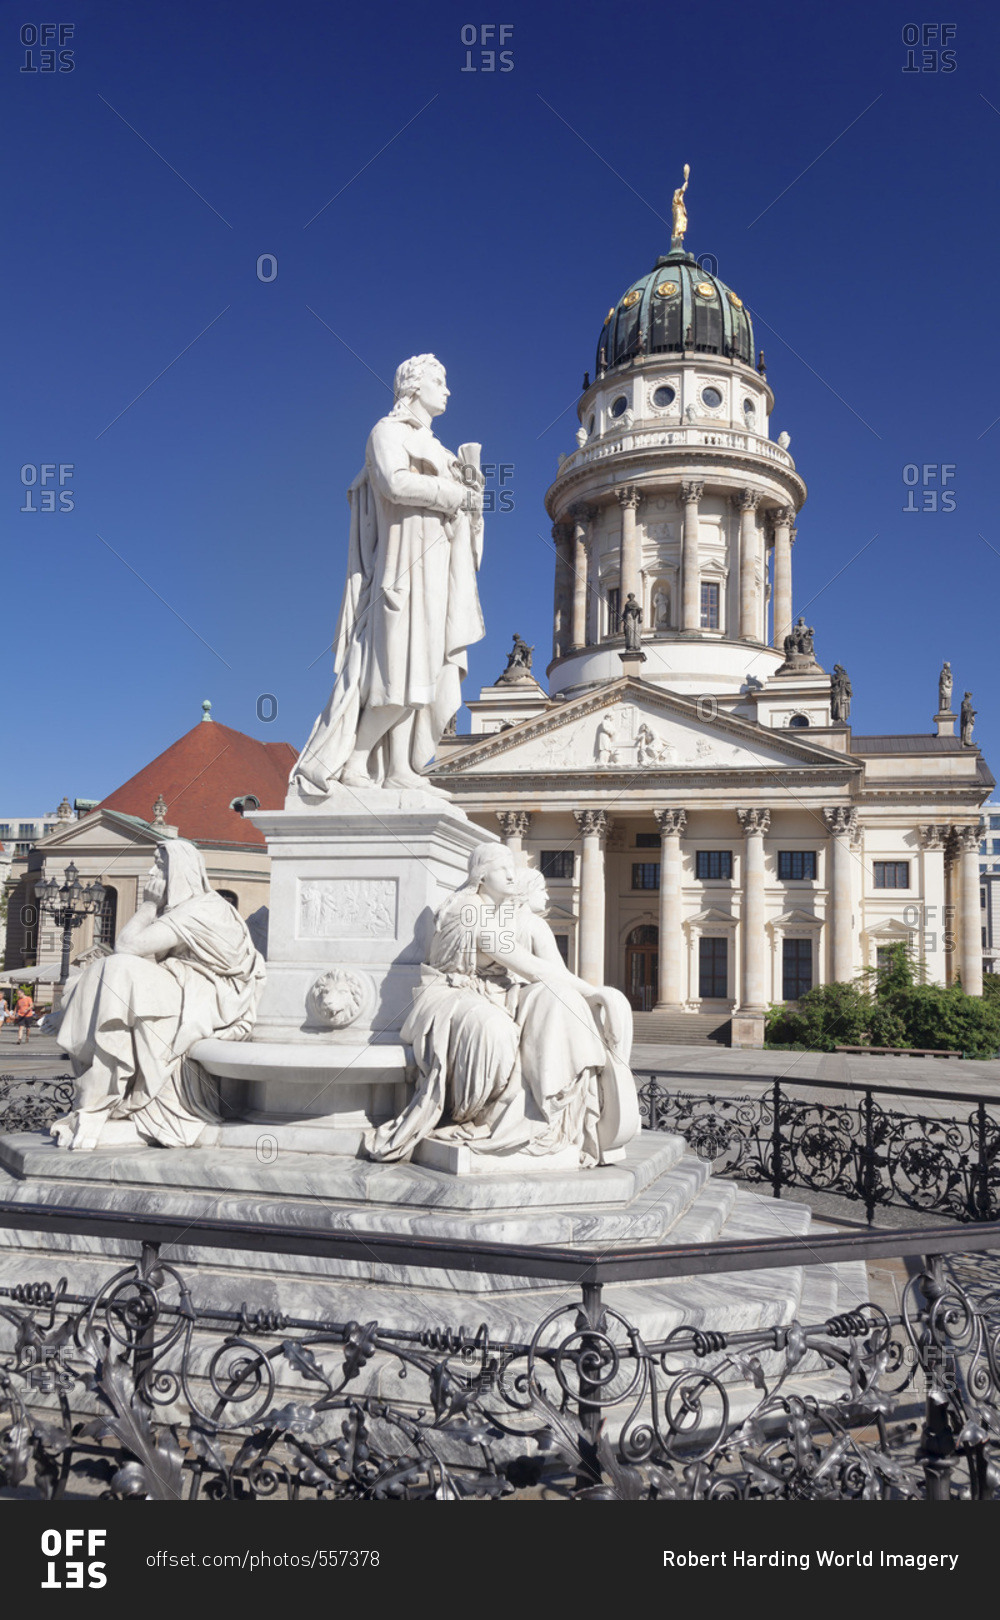 Franzoesischer Dom (French Cathedral), Schiller memorial, Gendarmenmarkt, Mitte, Berlin, Germany, Europe